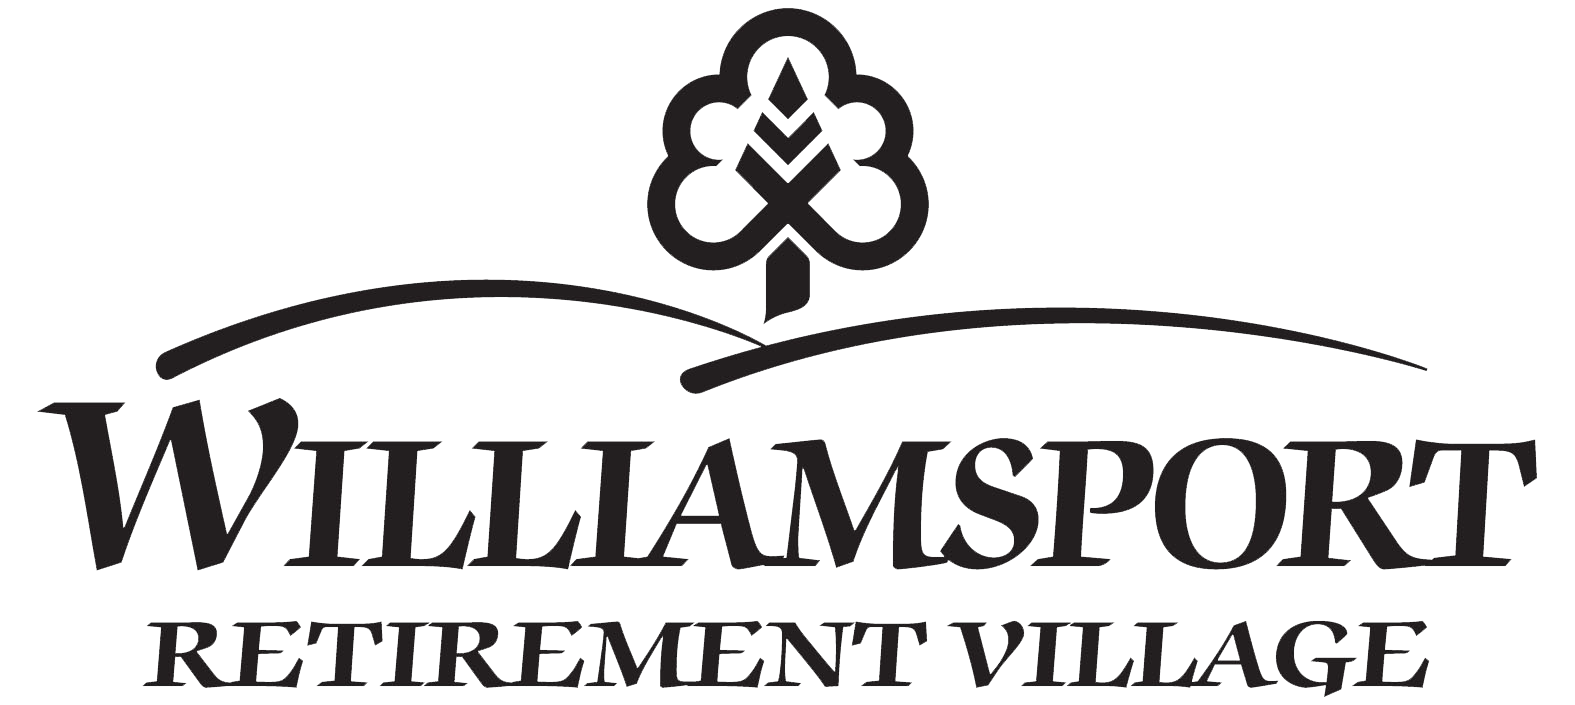 Williamsport Retirement Village